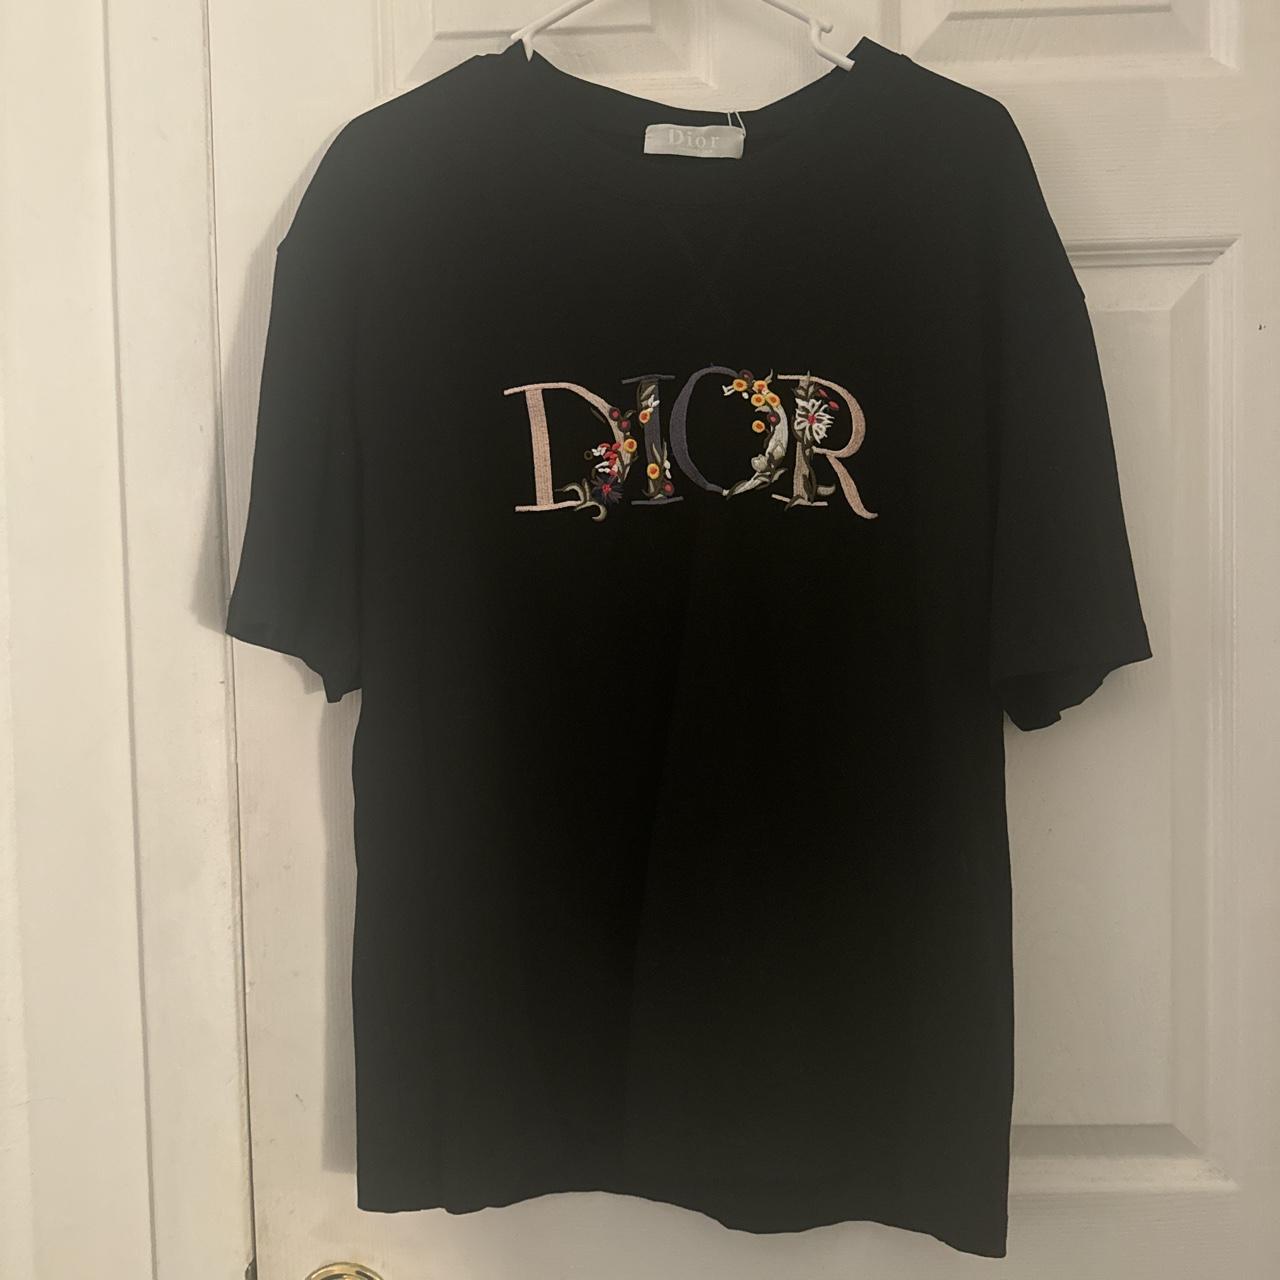 Dior Flowers Embroidered T-Shirt Never worn /... - Depop